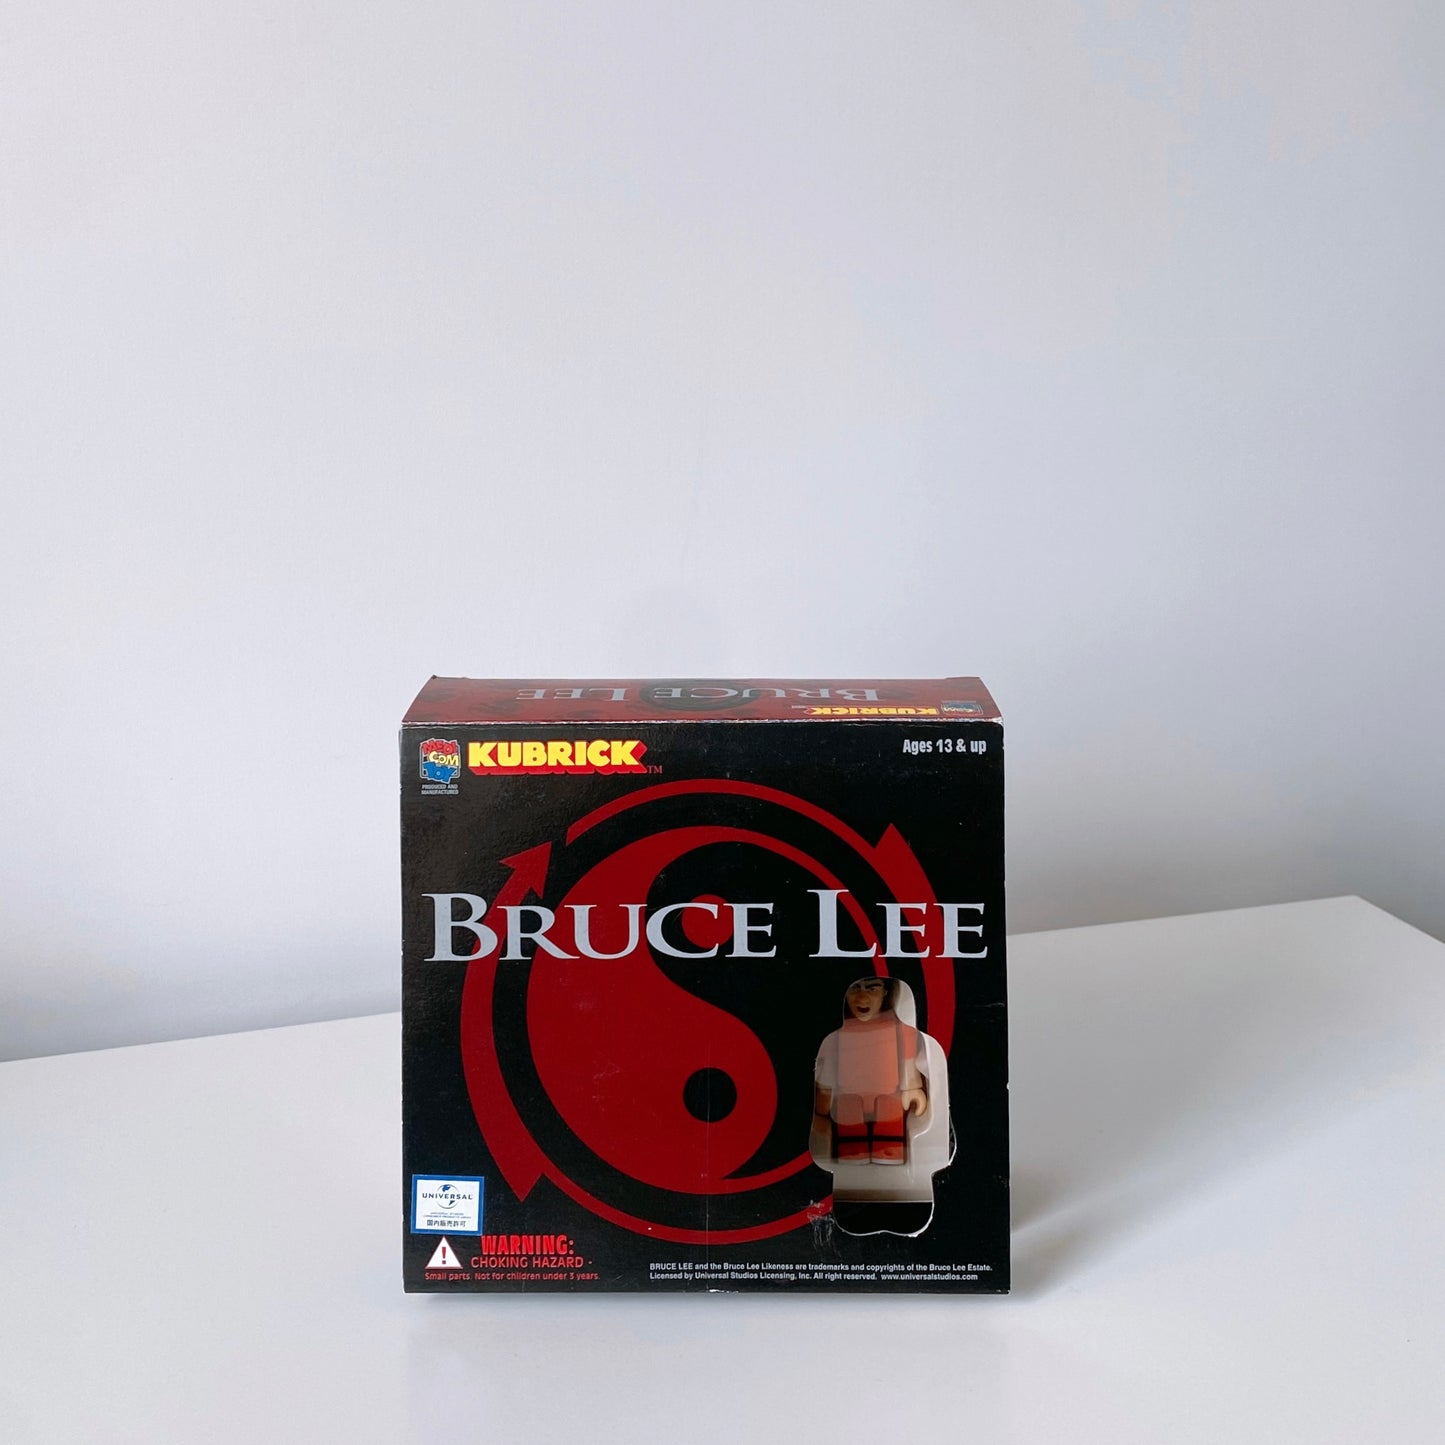 Bruce Lee Kubrick